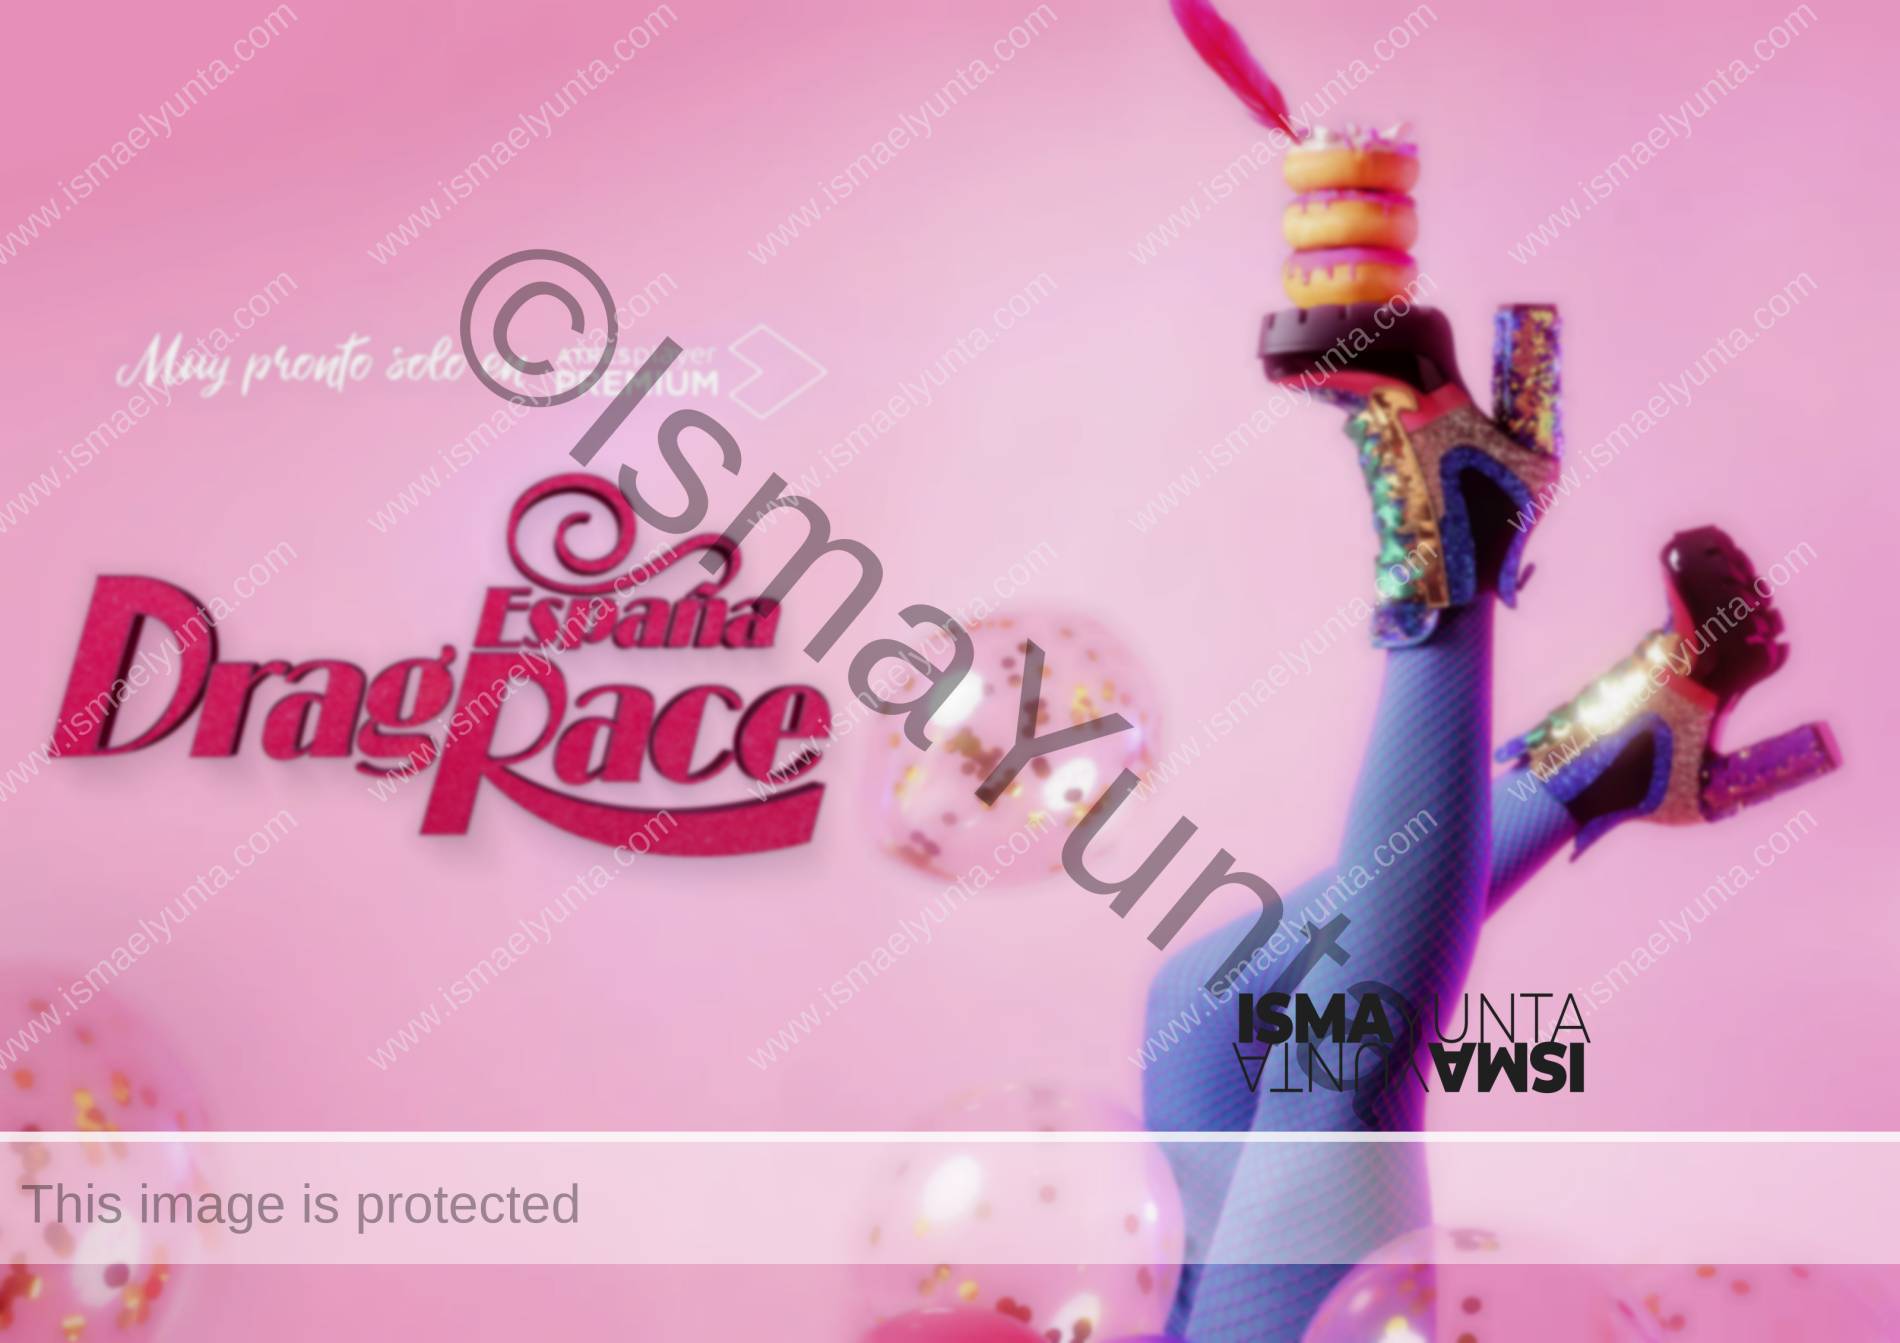 Drag Race [TV Show]